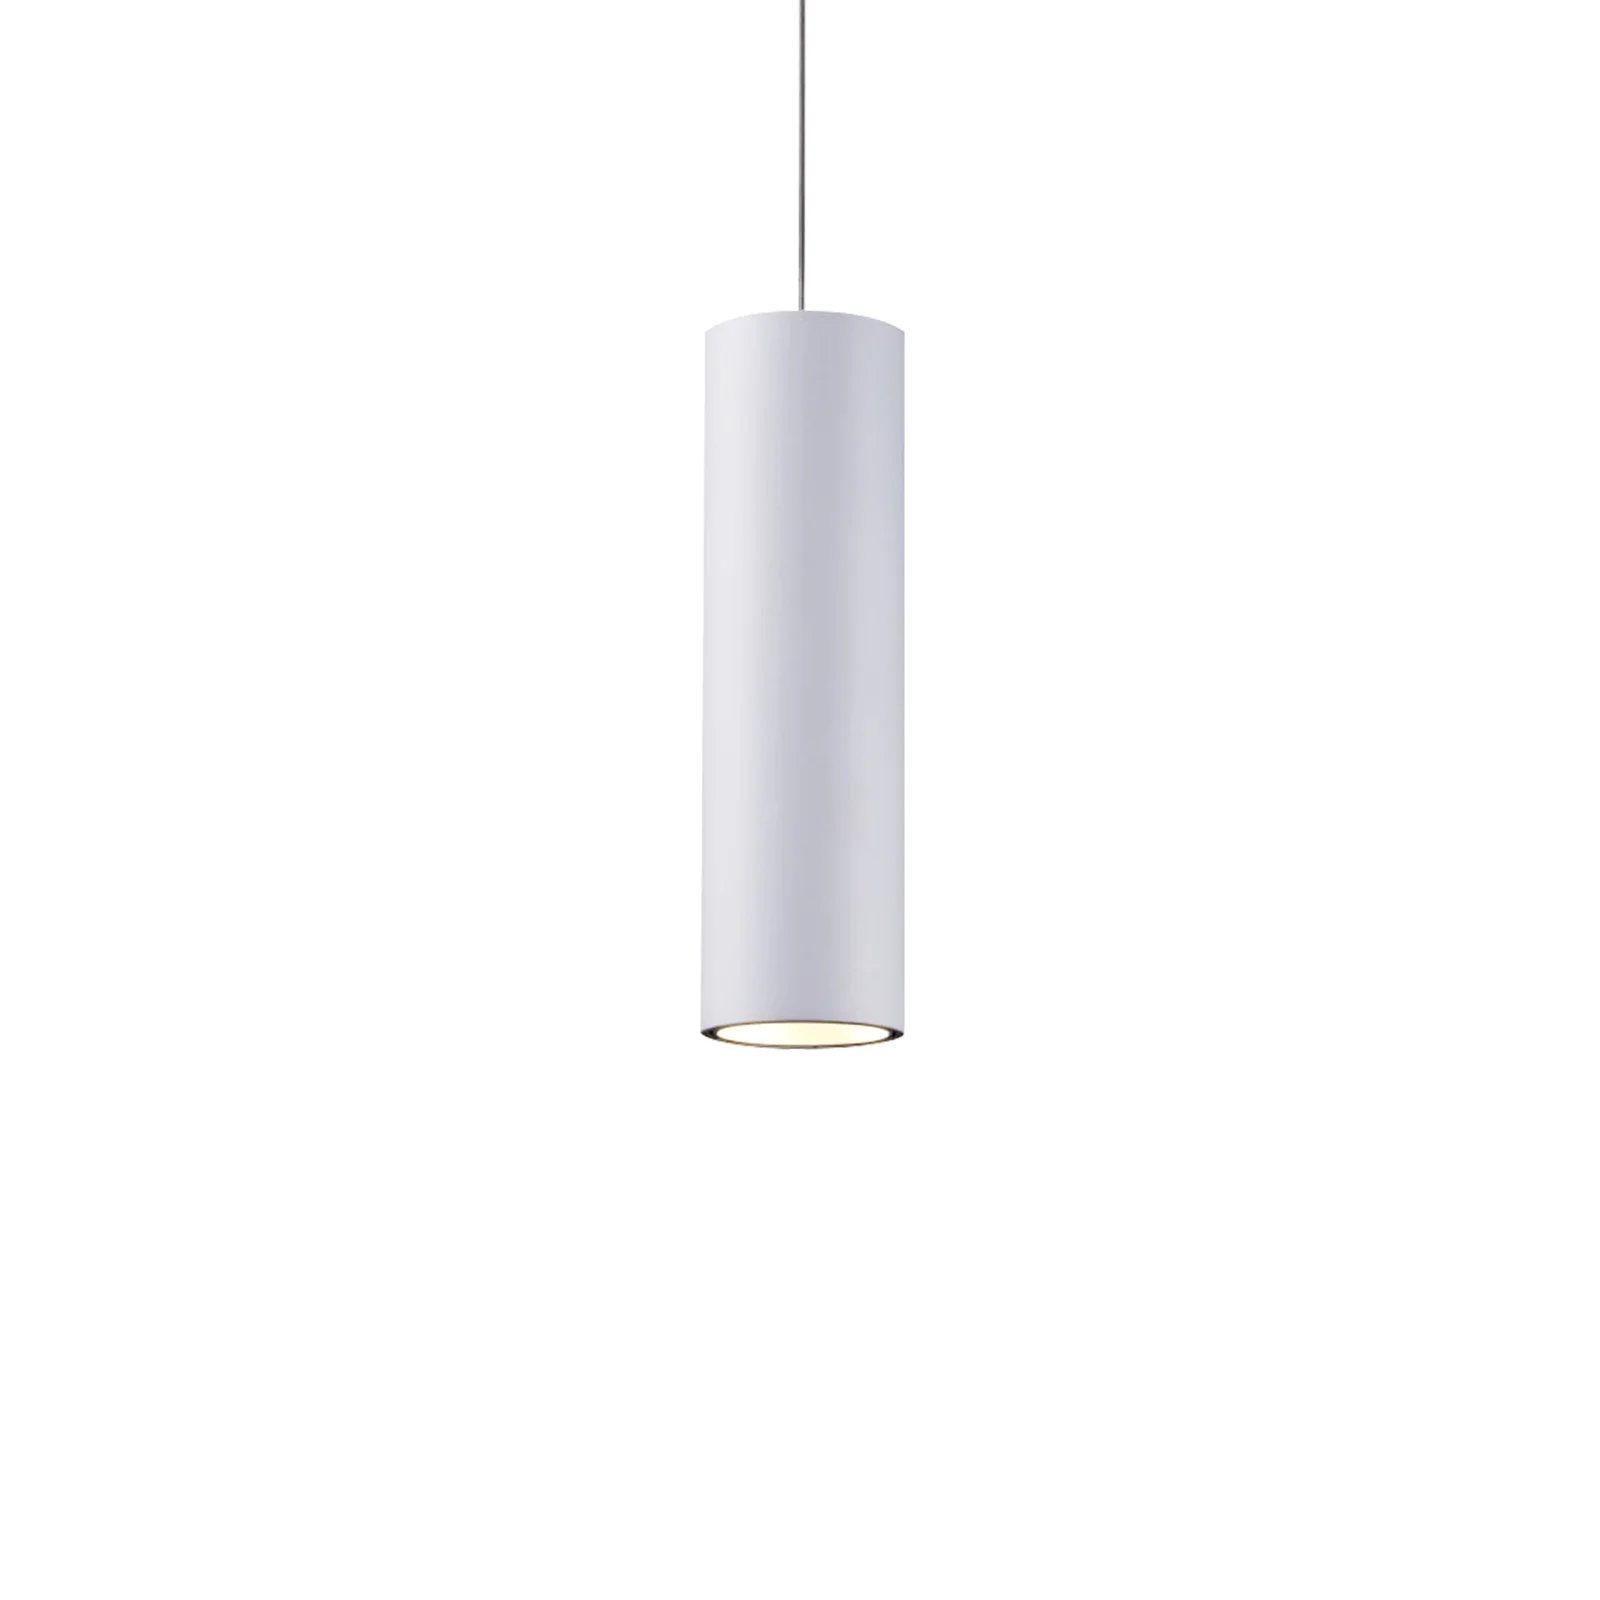 Hanging Latest Design Modern Nordic Long Tube LED Dimmable Slim Mini Cylinder Type aluminum Pendant Light